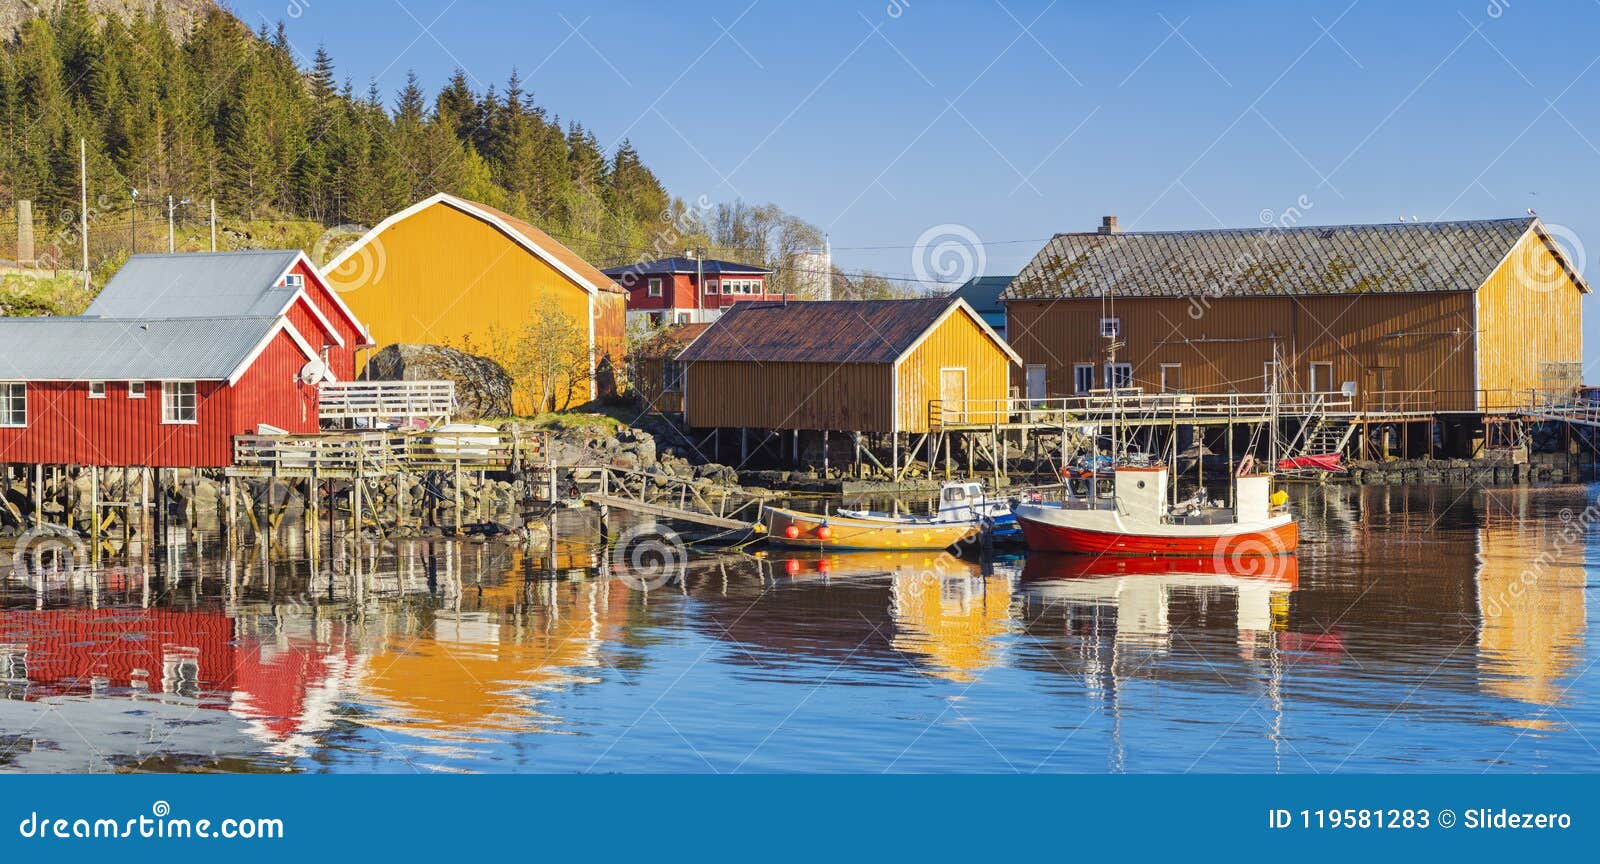 moskenes village, lofoten islands, norway